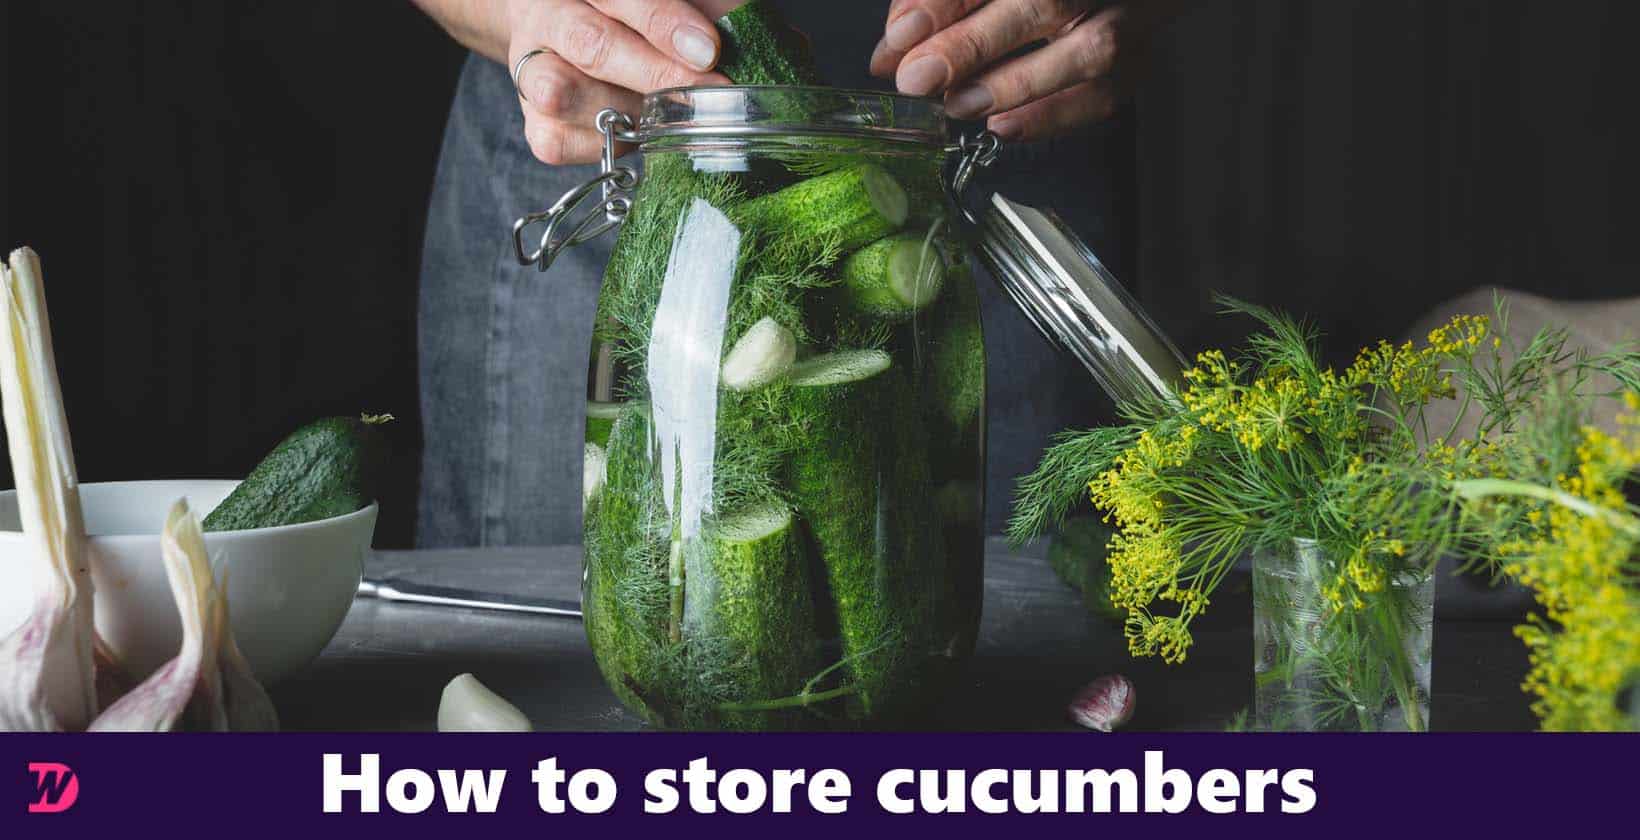 Storing cucumbers